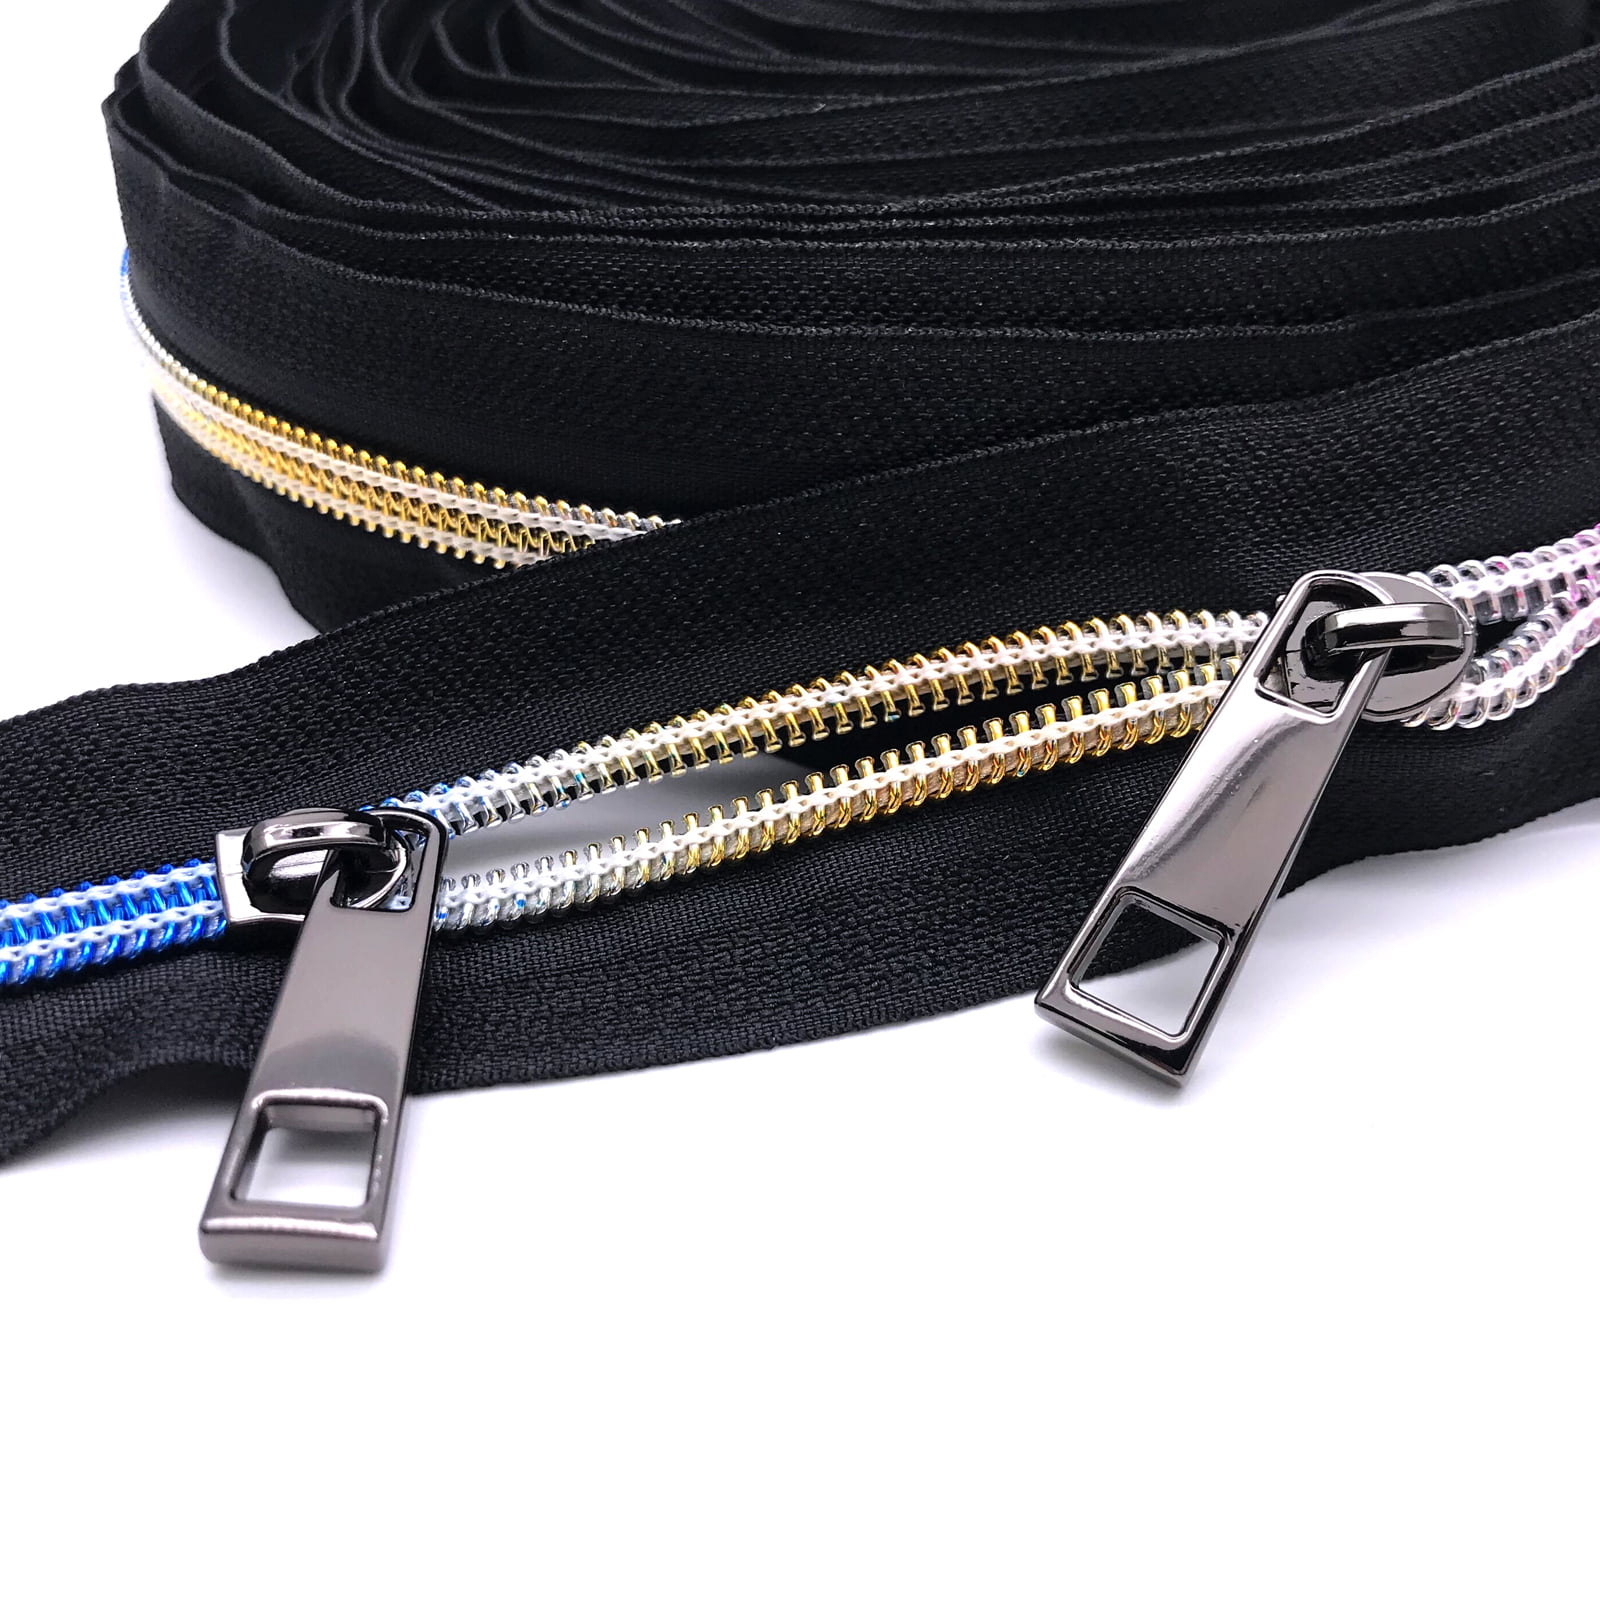 Hywei Hywei545 Goyunwell #5 Black Zipper Tape by The Yard Gold Zipper 10  Yard with 20pcs Zipper Pulls #5 Nylon Zippers for Sweing Bags and Purses